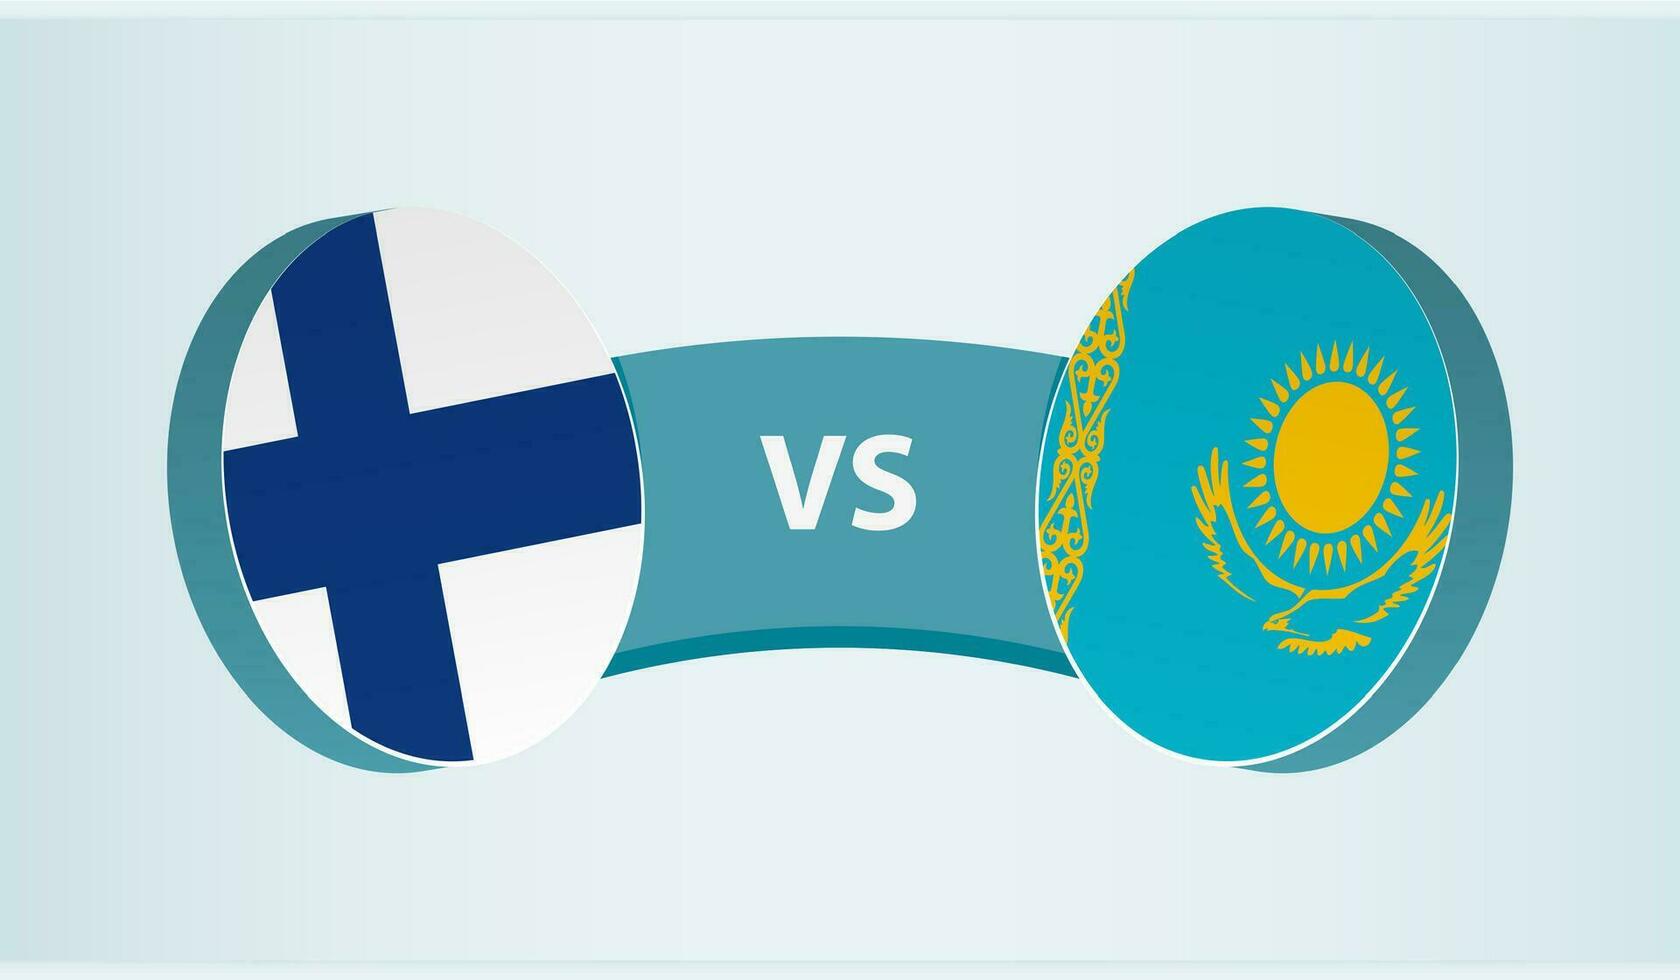 finland mot Kazakstan, team sporter konkurrens begrepp. vektor